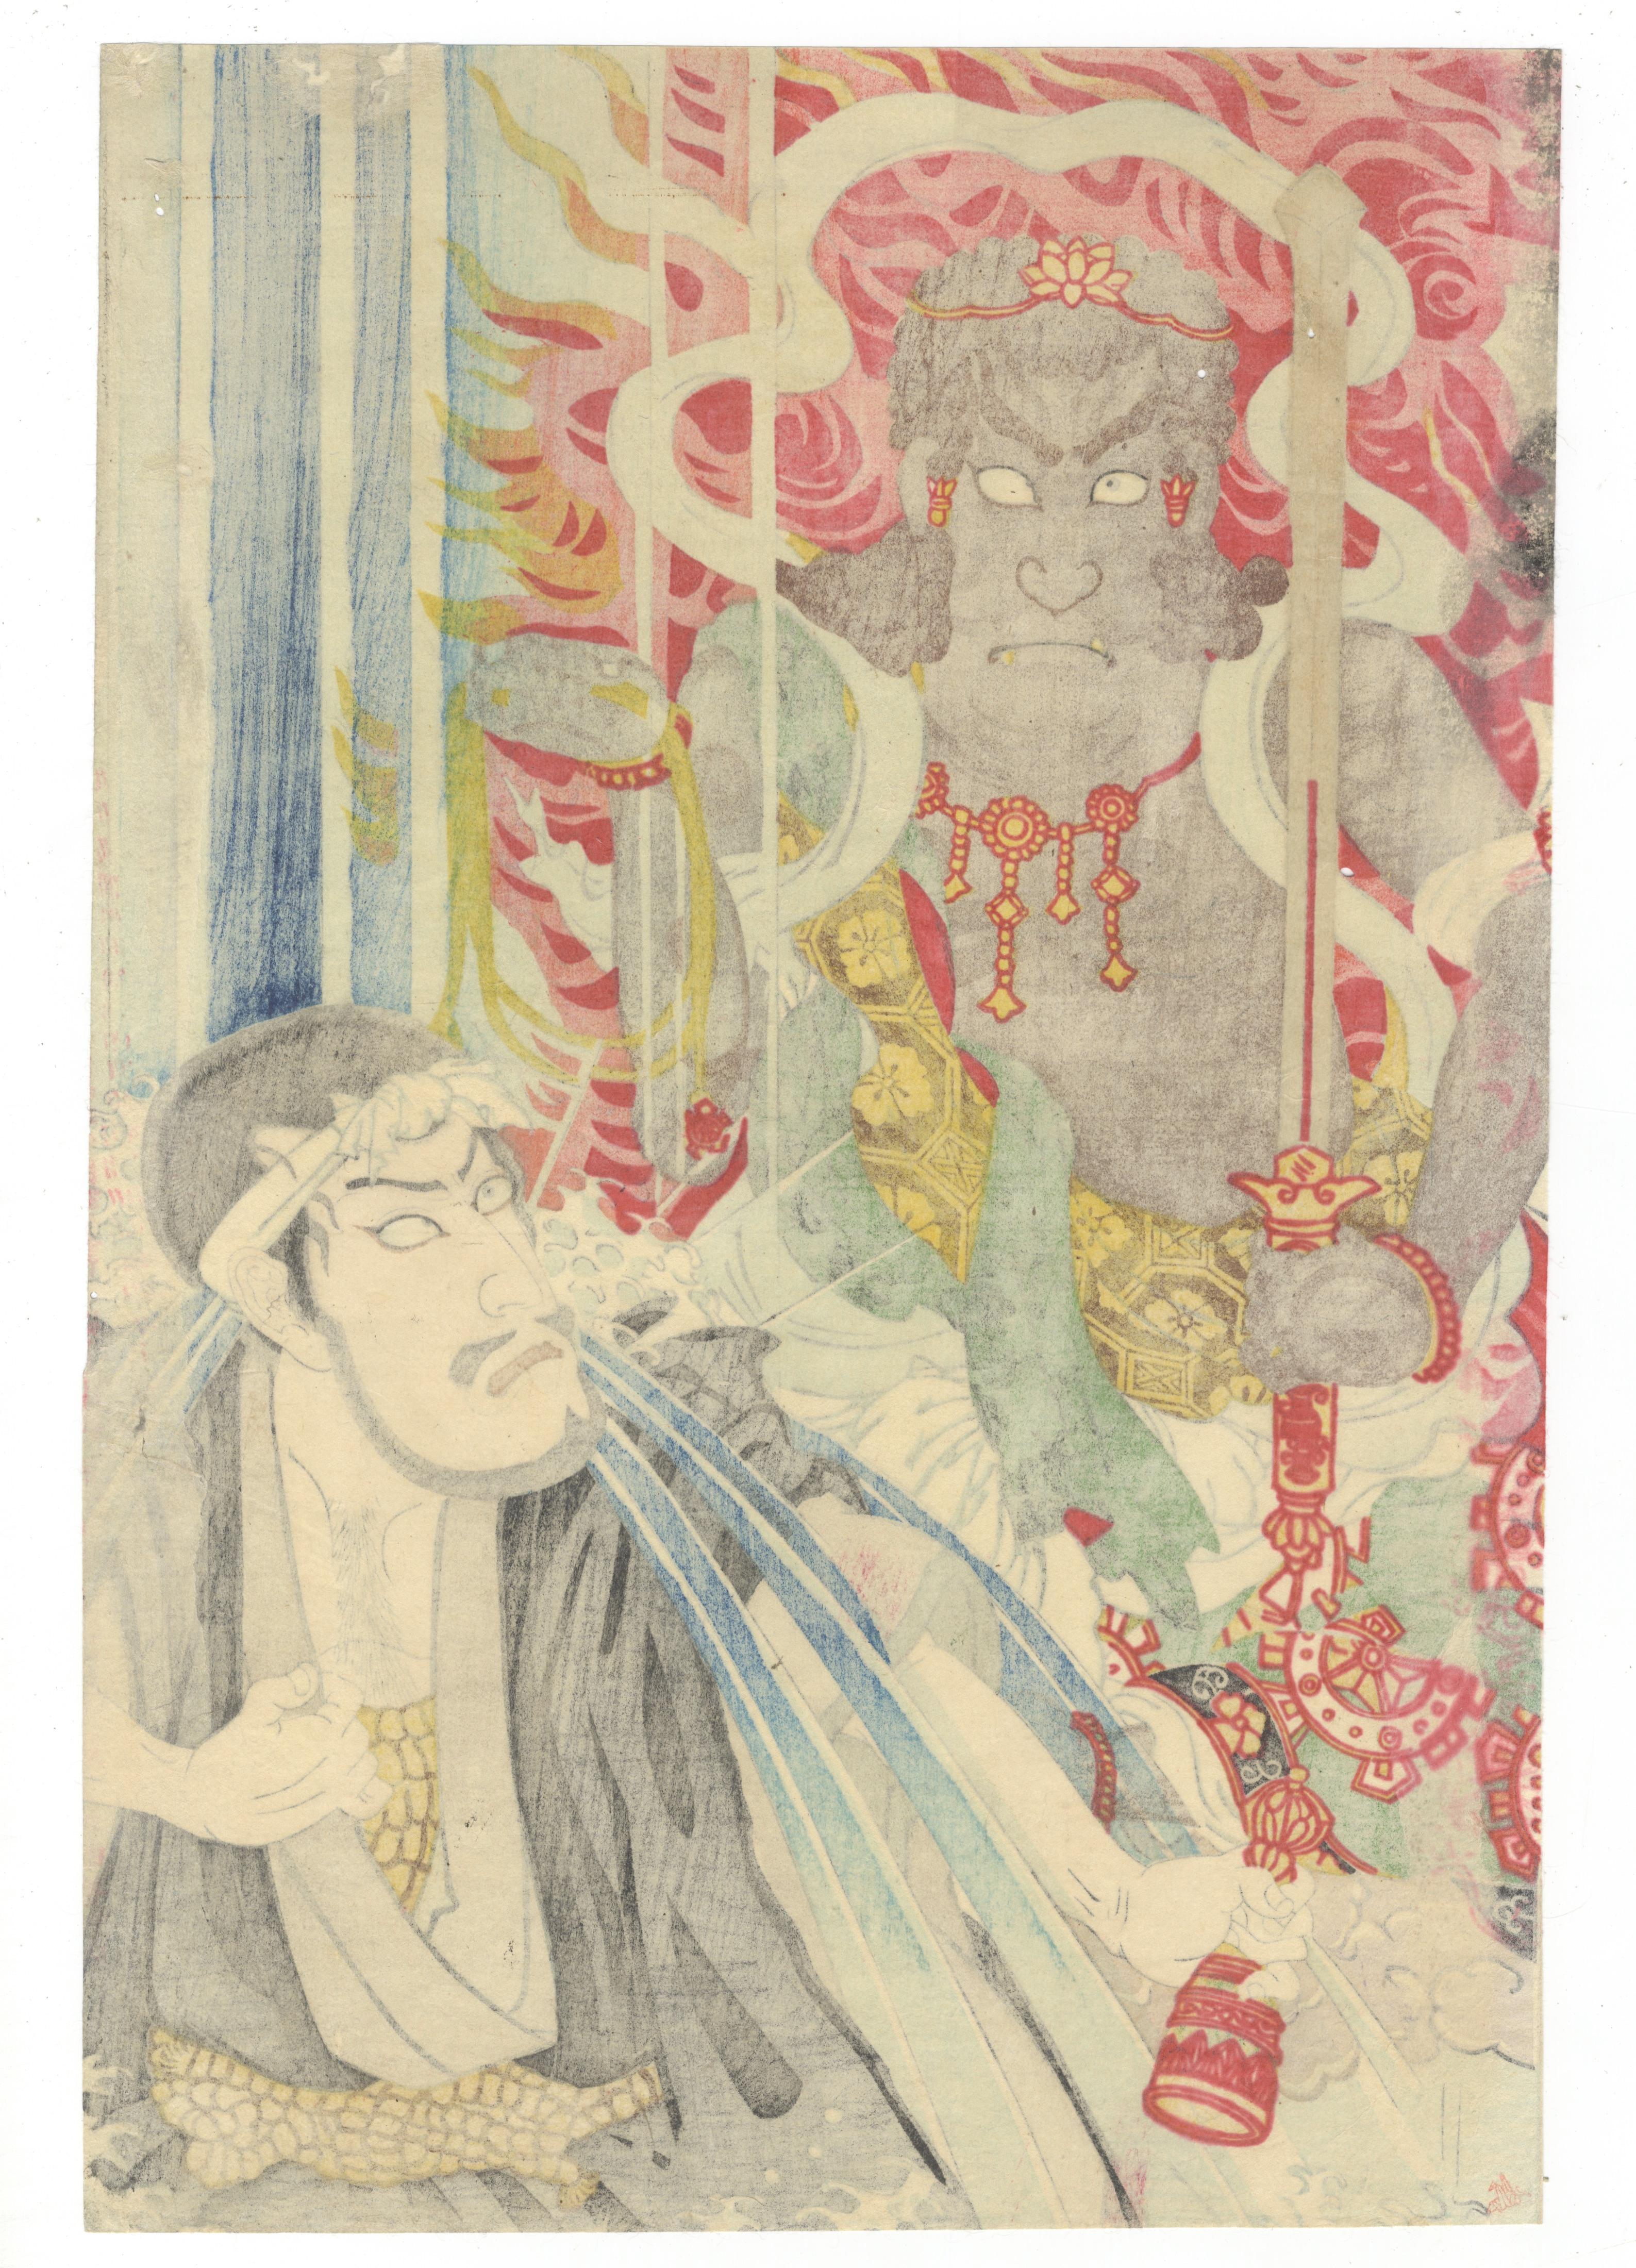 Artist: Kunichika Toyohara (1835-1900)
Title: Nachi no Taki Chikai no Mongaku
Publisher: Kishida Chojiro
Date: 1896
Size: (L) 24.2 x 35.8 (C) 24.1 x 35.9 (R) 23.9 x 35.7 cm
Condition report: Slightly trimmed, red pigment running, wormholes